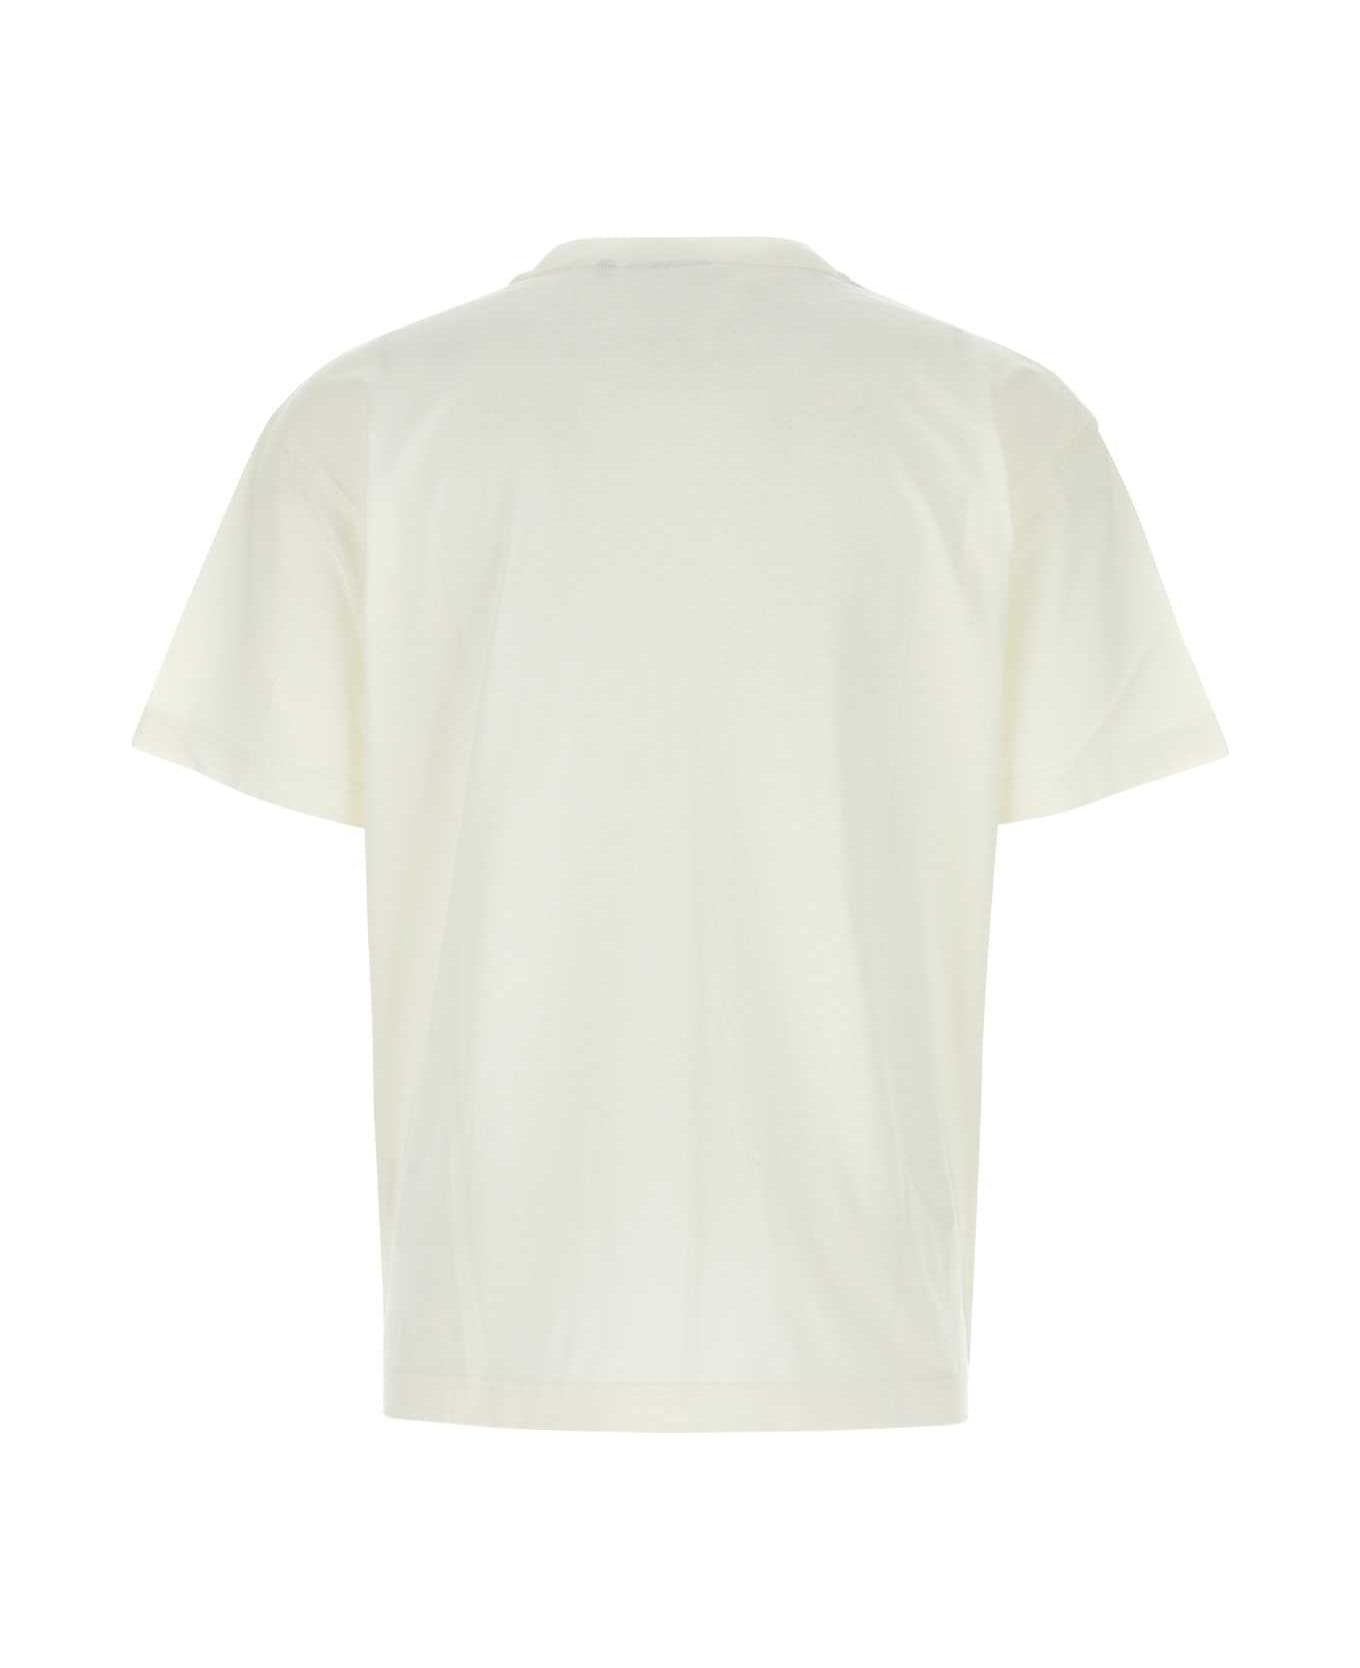 Carhartt White Cotton Oversize S/s Nelson T-shirt - WAX